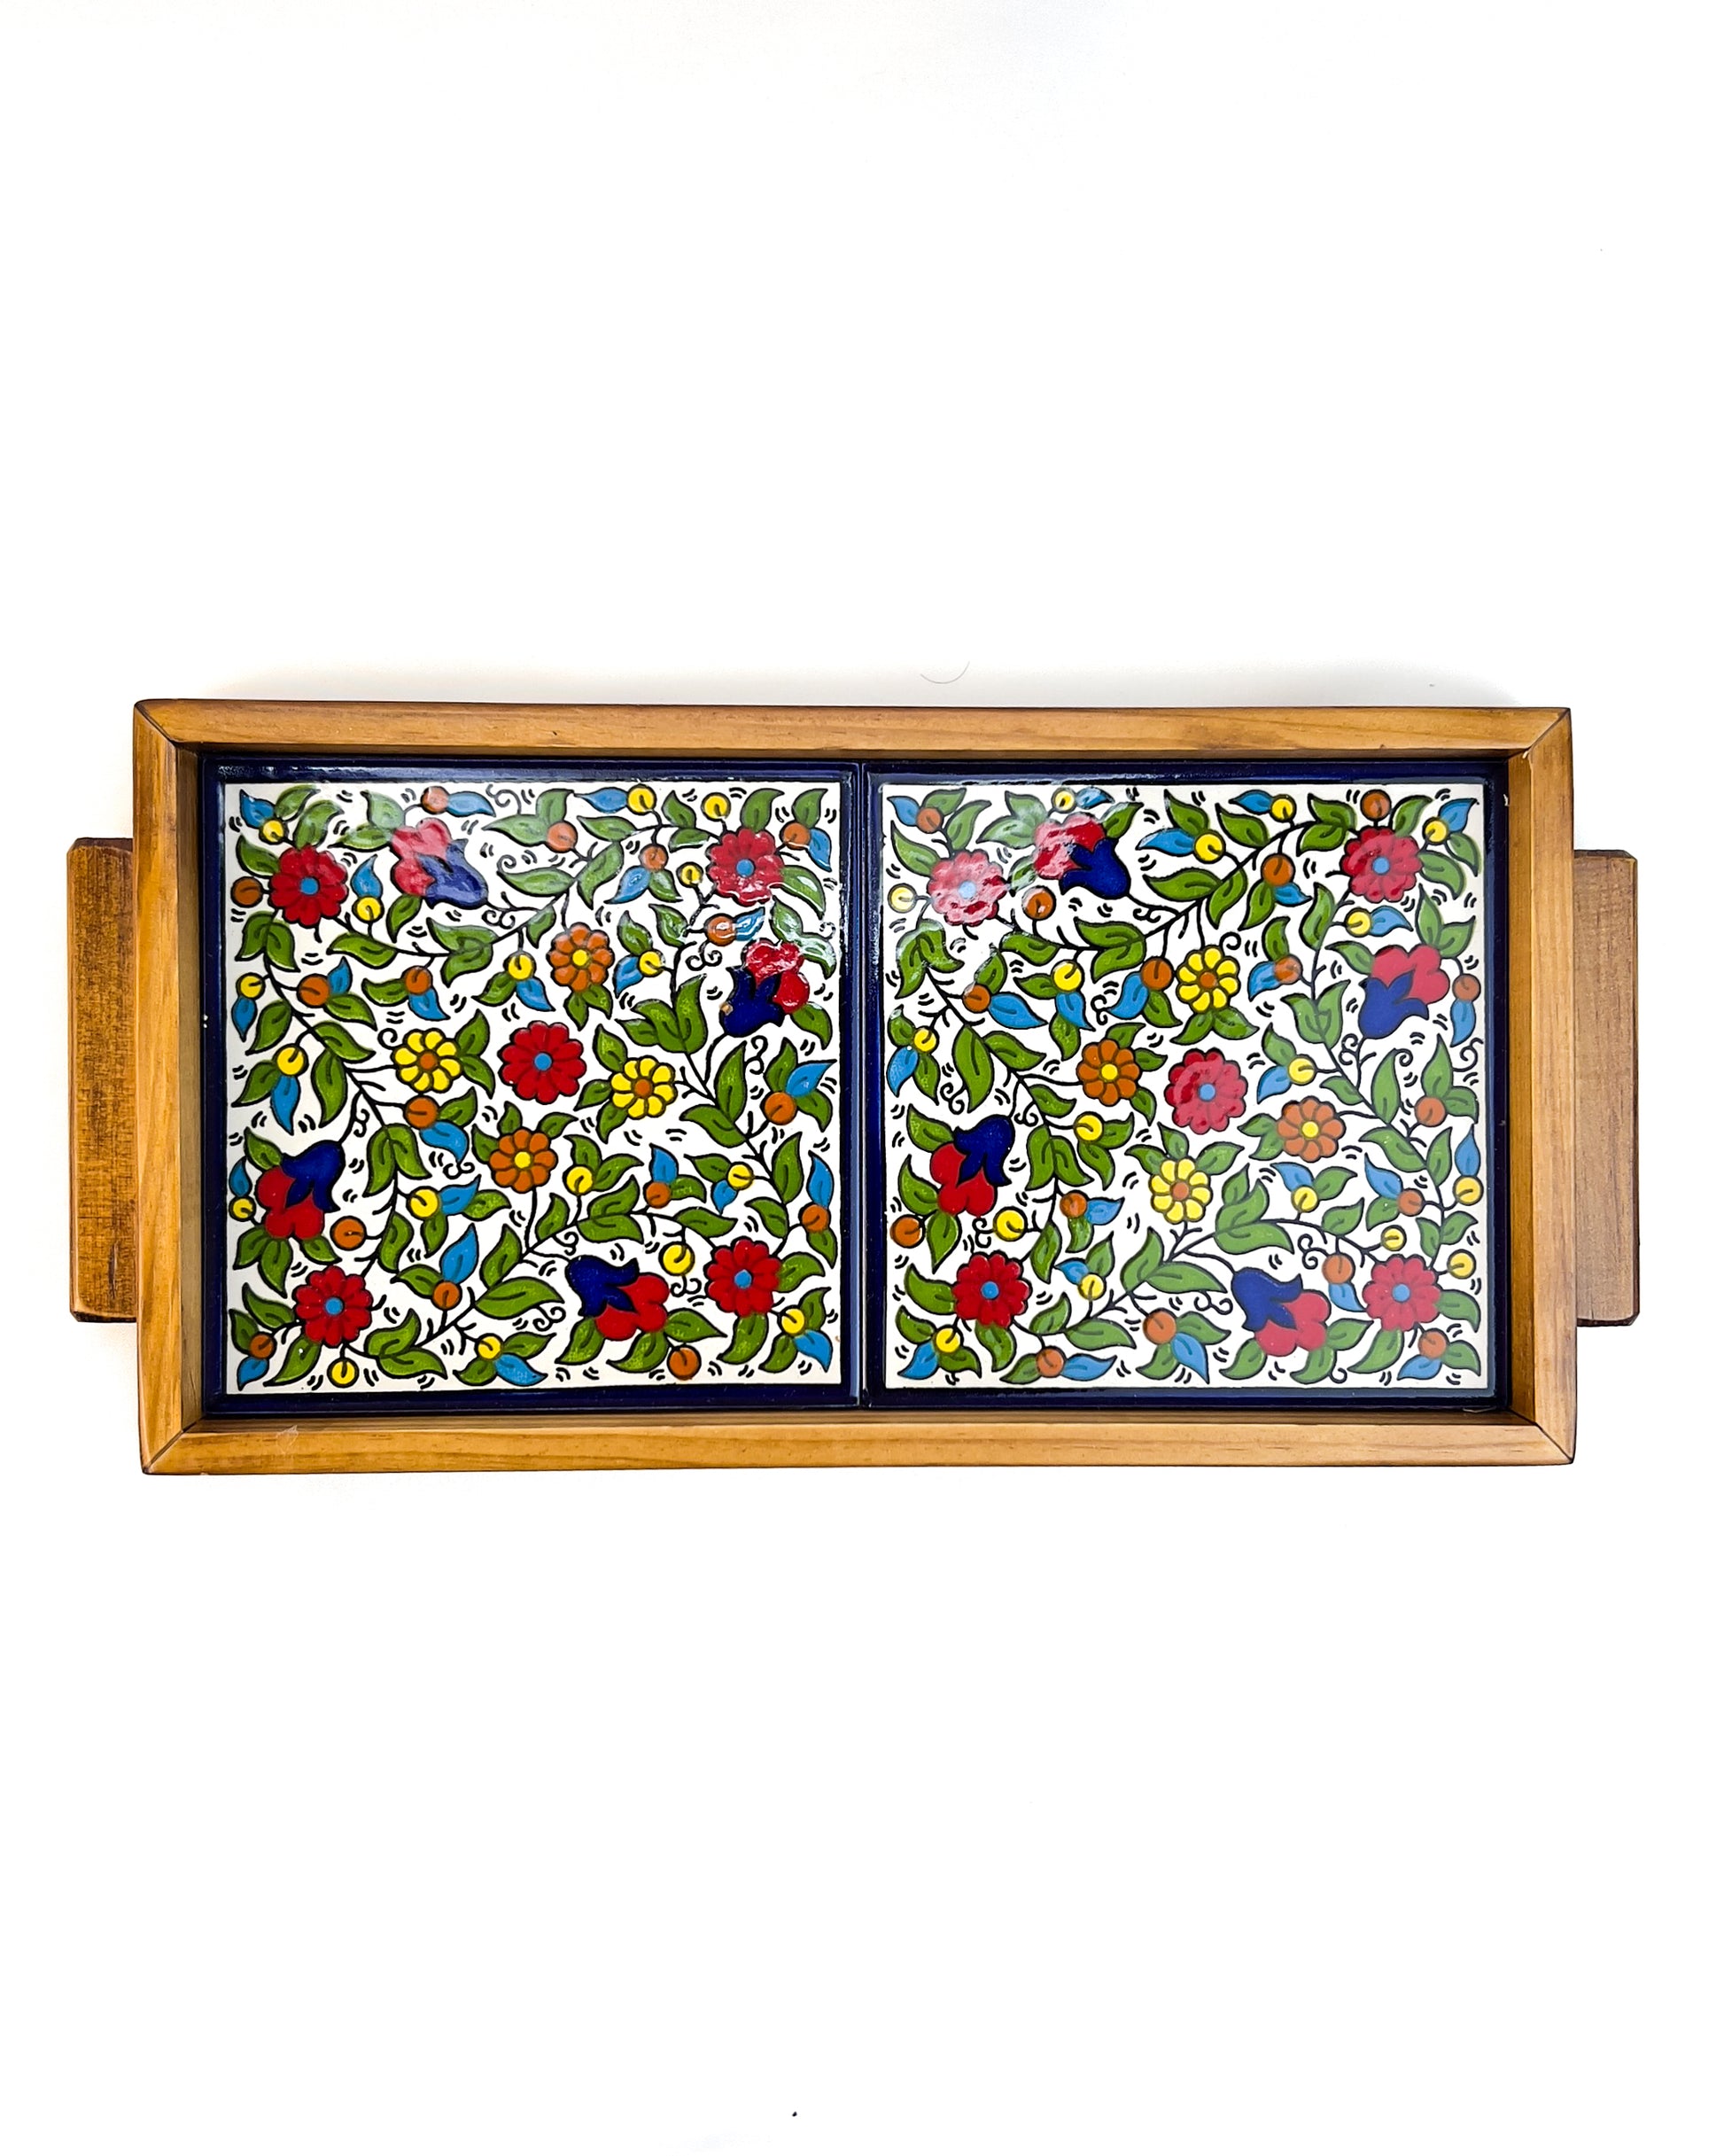 x 31 17 – cm & Keramik البَيّارةْ Al-Byarah cm Kunsthandwerksboden - Servierplatte Olivenholz